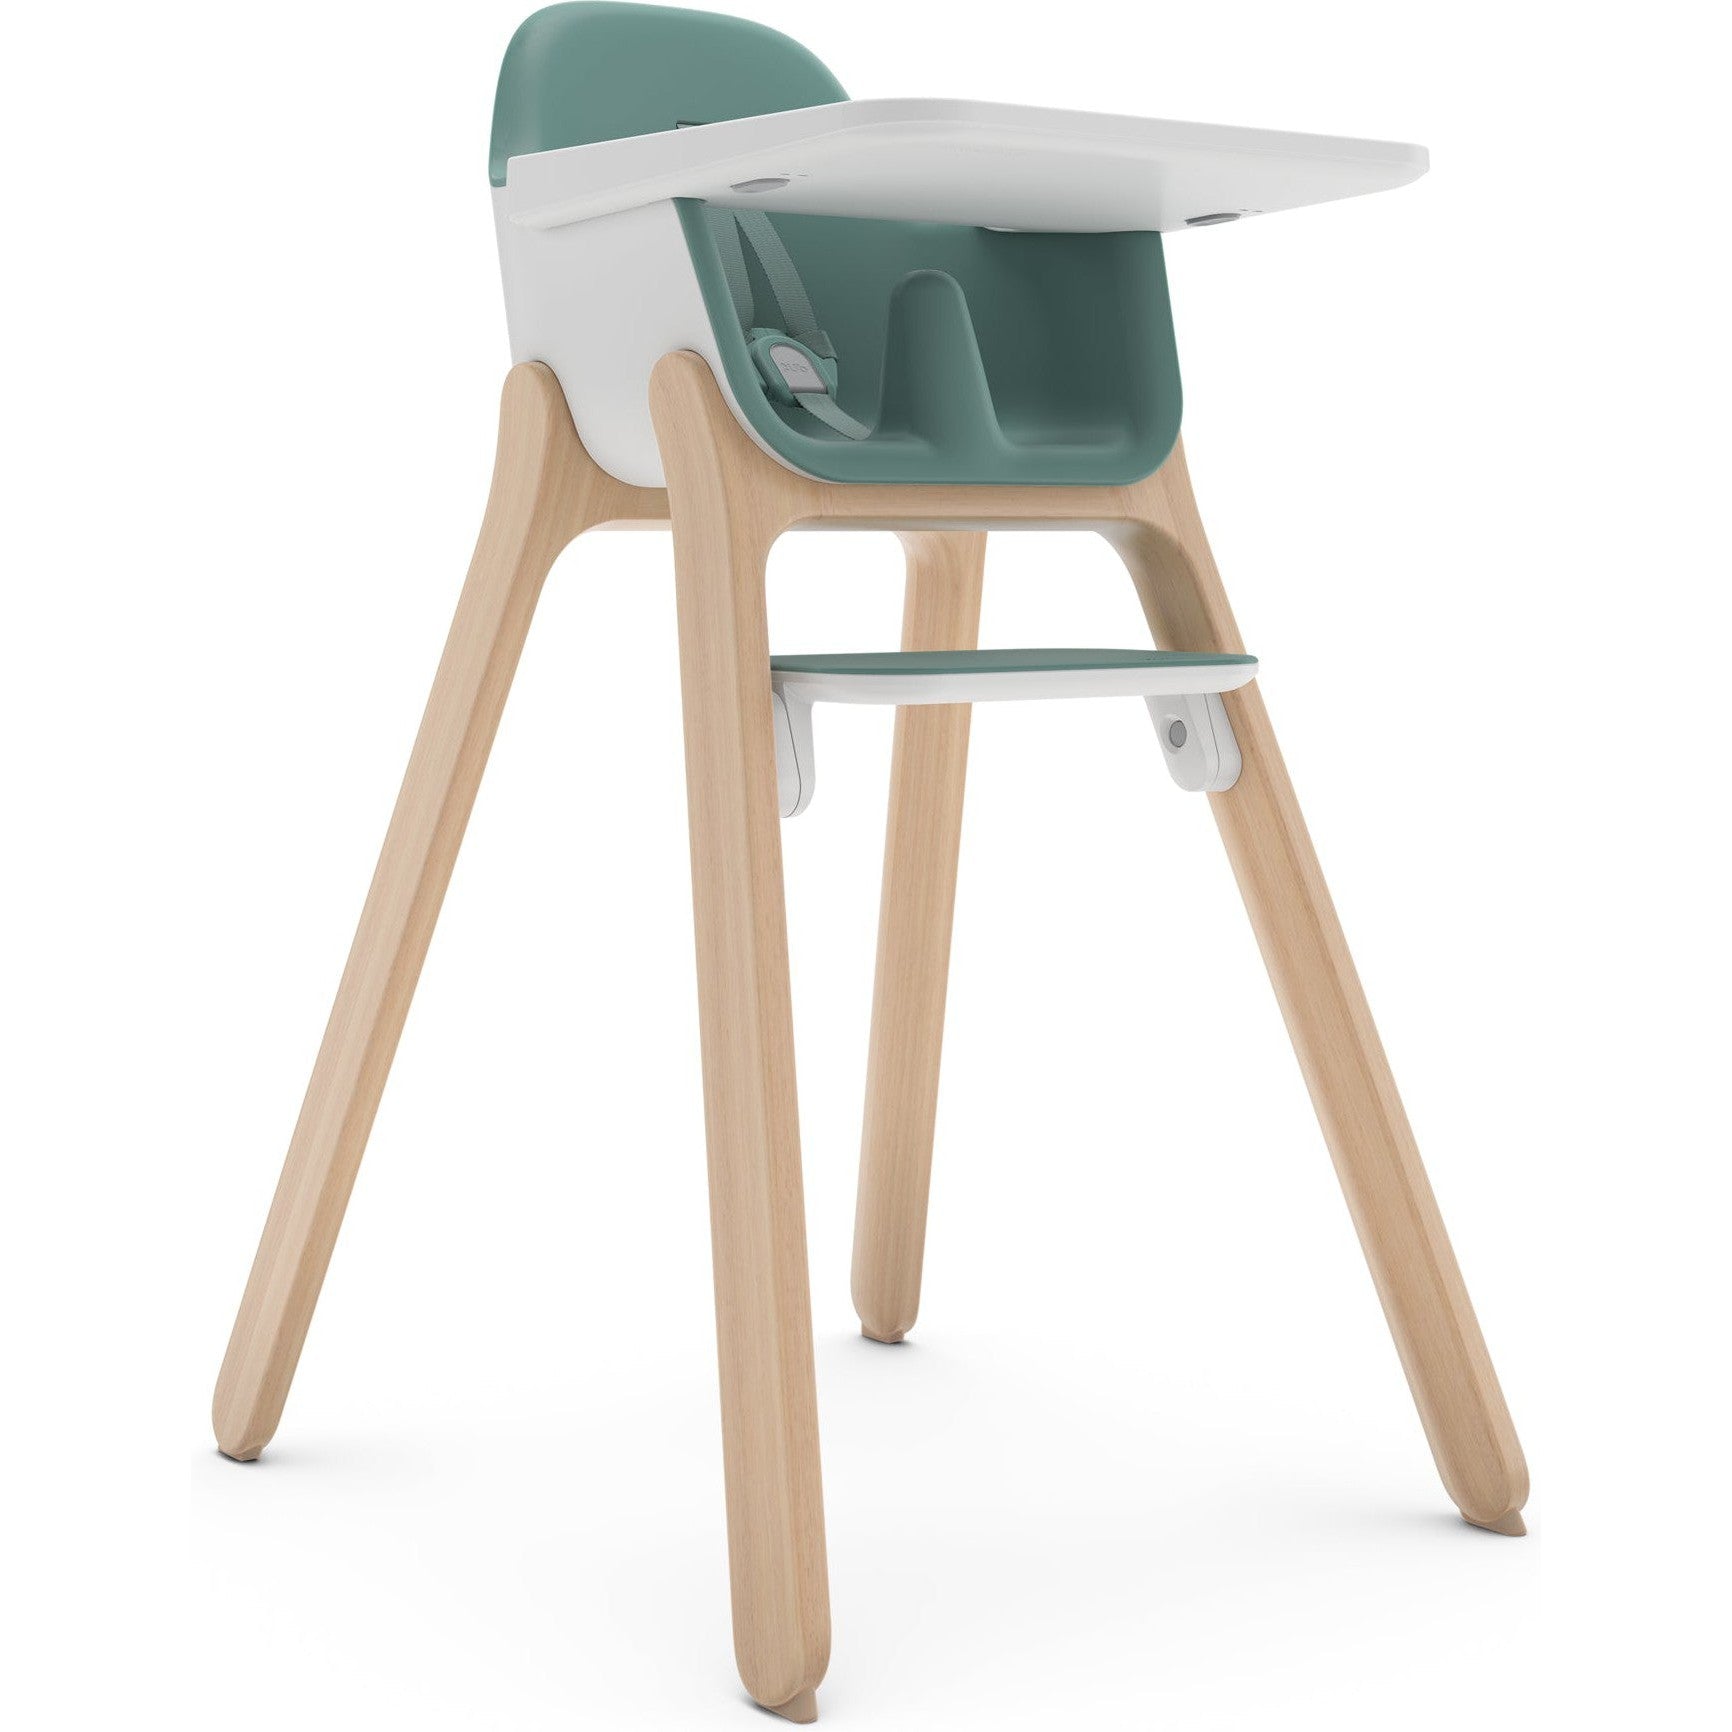 Buy emrick-spruce-green UPPAbaby Ciro High Chair